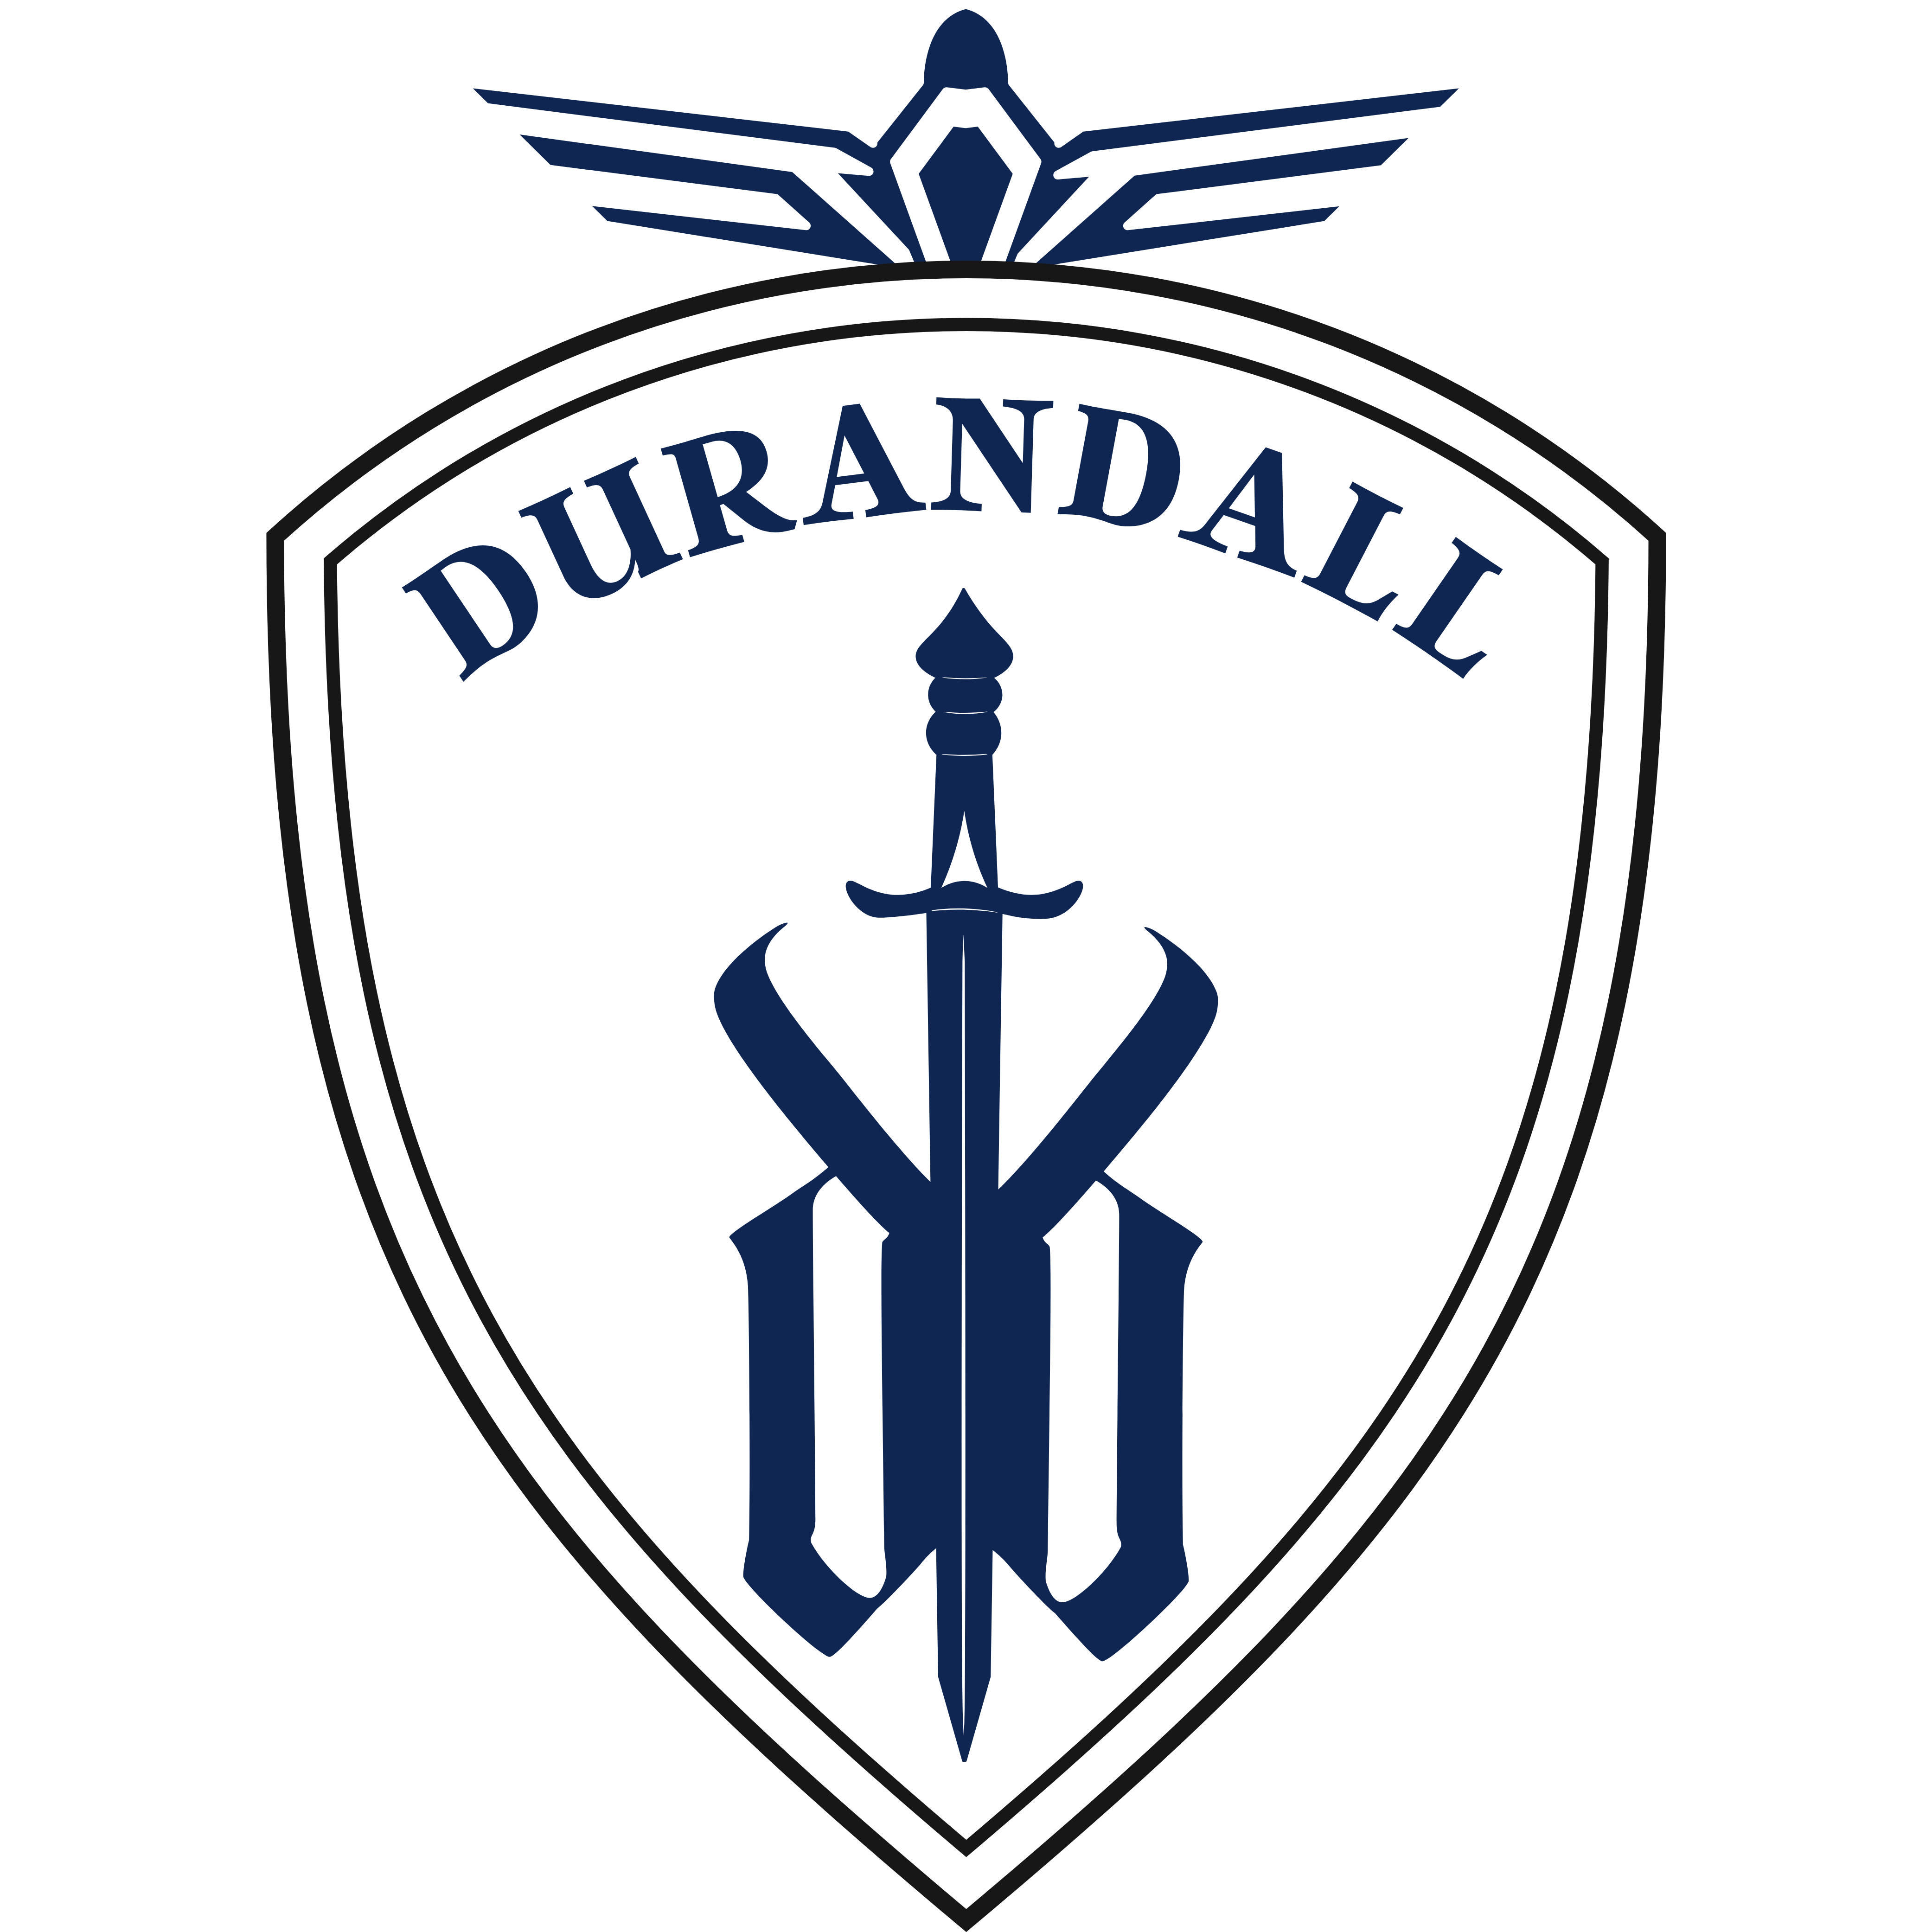 Durandall